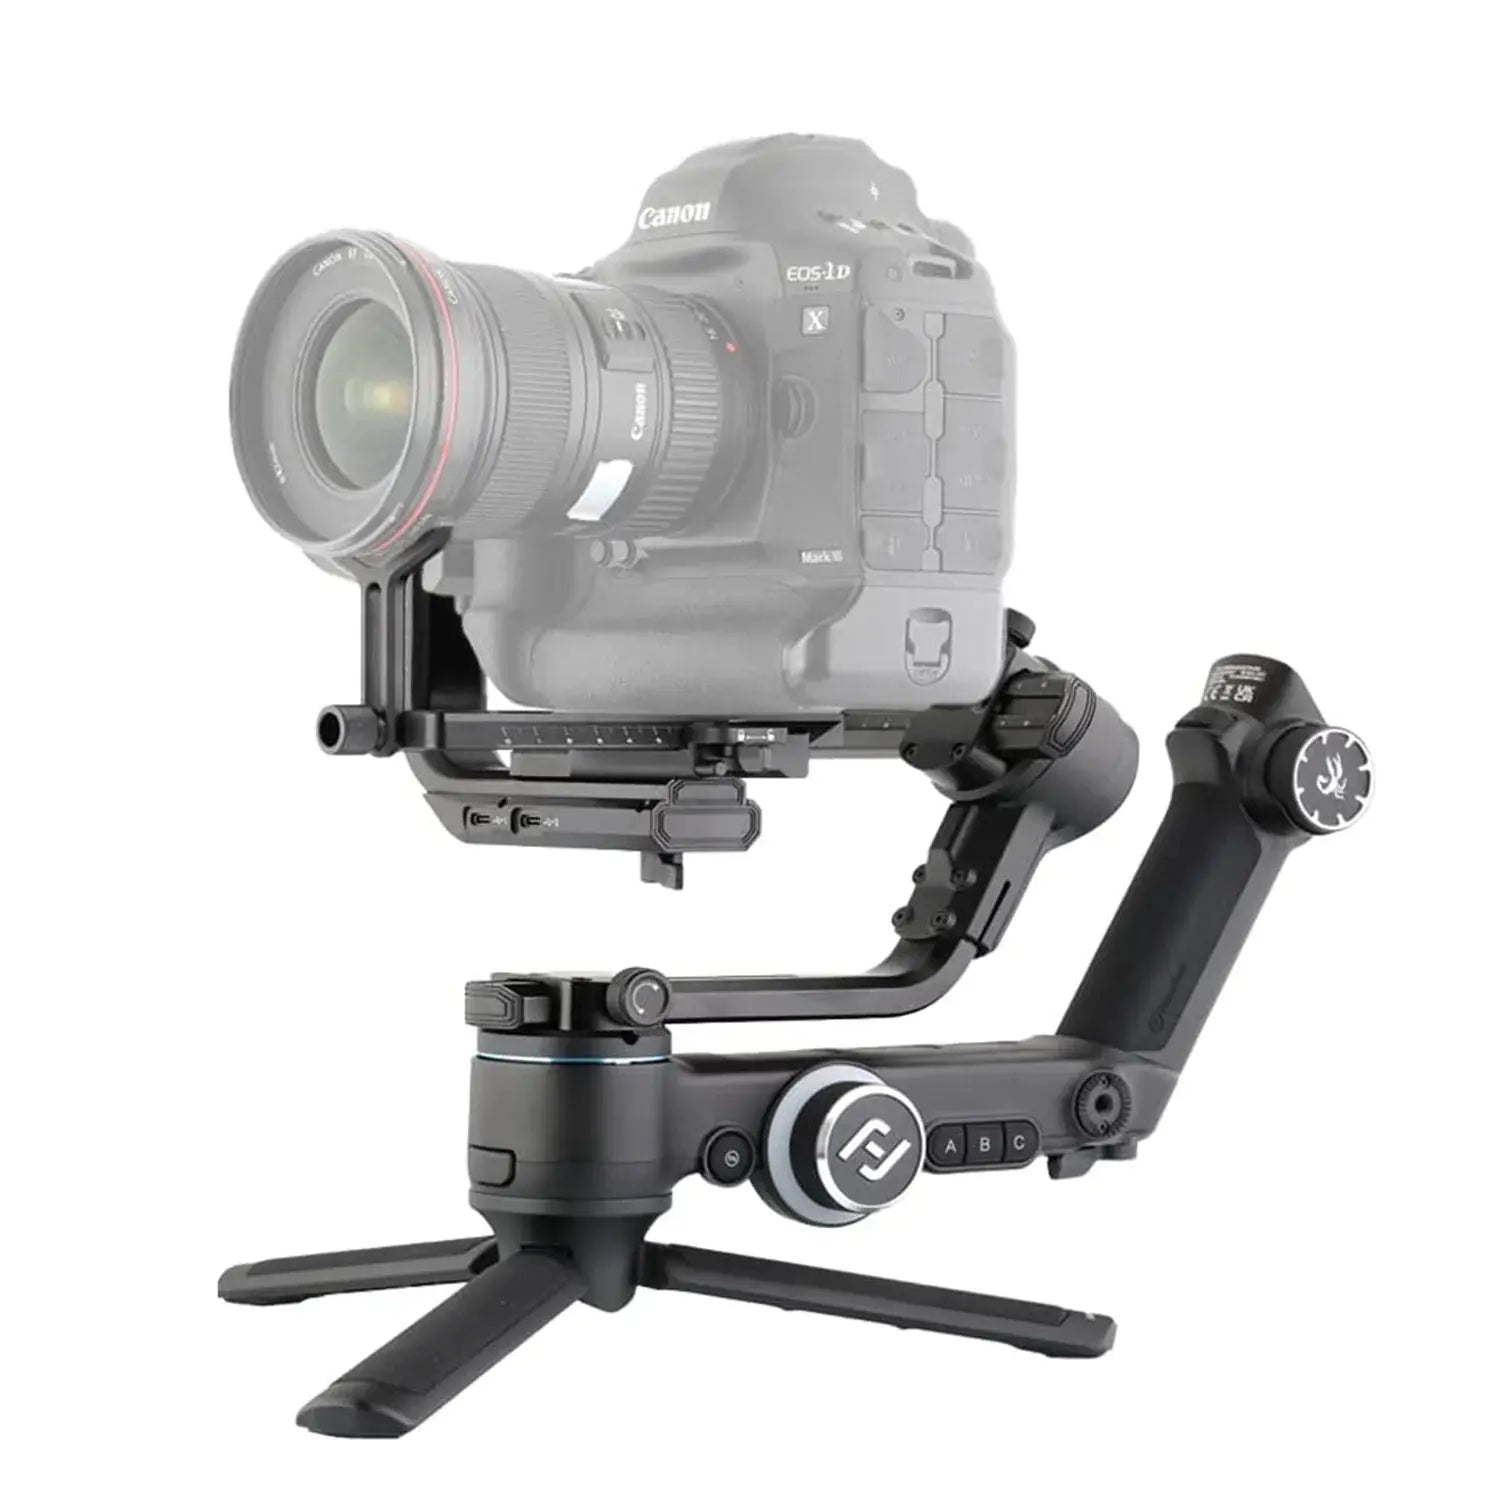 Feiyu Scorp Pro Detachable 3-Axis Professional Gimbal Stabilizer for Cinema DSLR Mirrorless Camera2